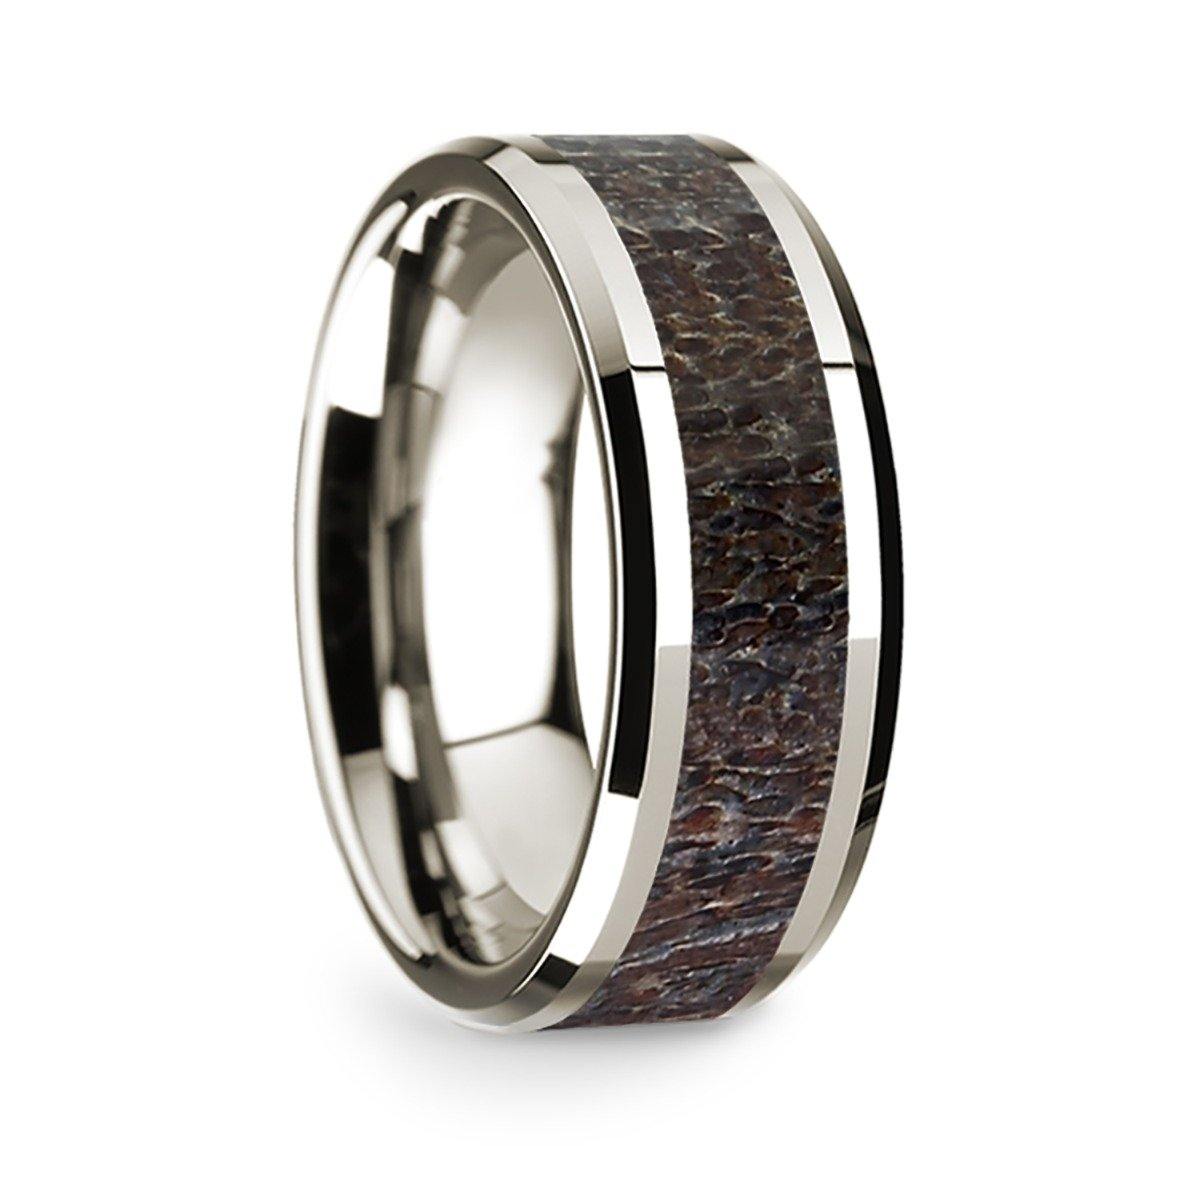 TABITHA - 14K White Gold Polished Beveled Edges Wedding Ring with Dark Deer Antler Inlay - 8 mm - The Rutile Ltd